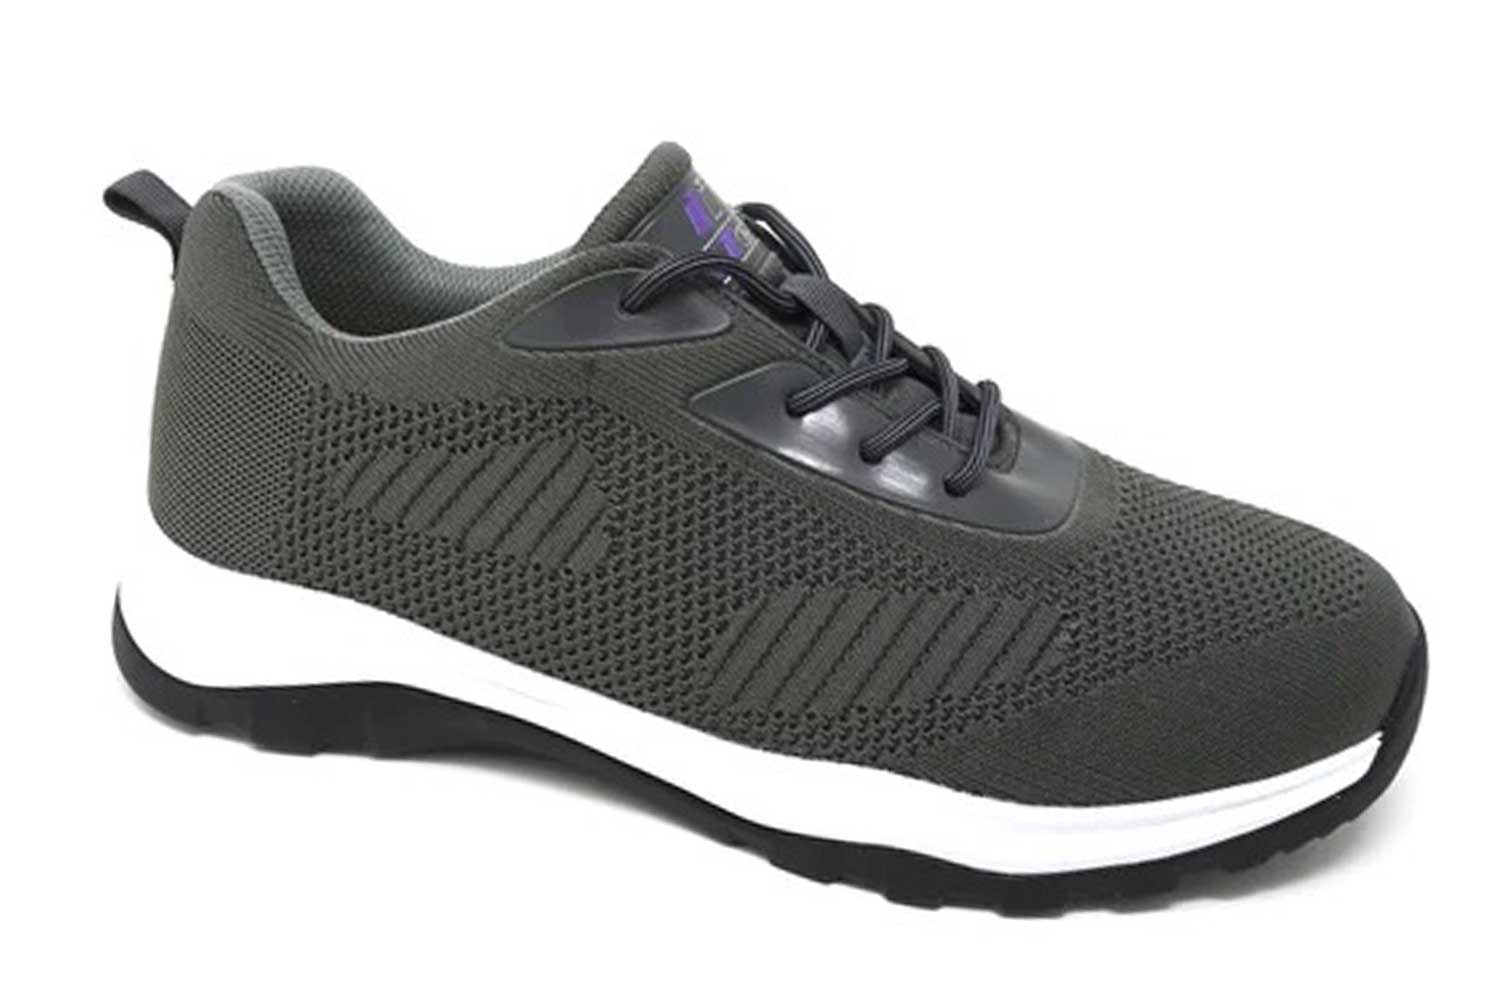 Apis FITec 9735-5L Men's Athletic Walking Shoe - Comfort Orthopedic Diabetic Shoe - Extra Depth For Orthotics - Extra Wide